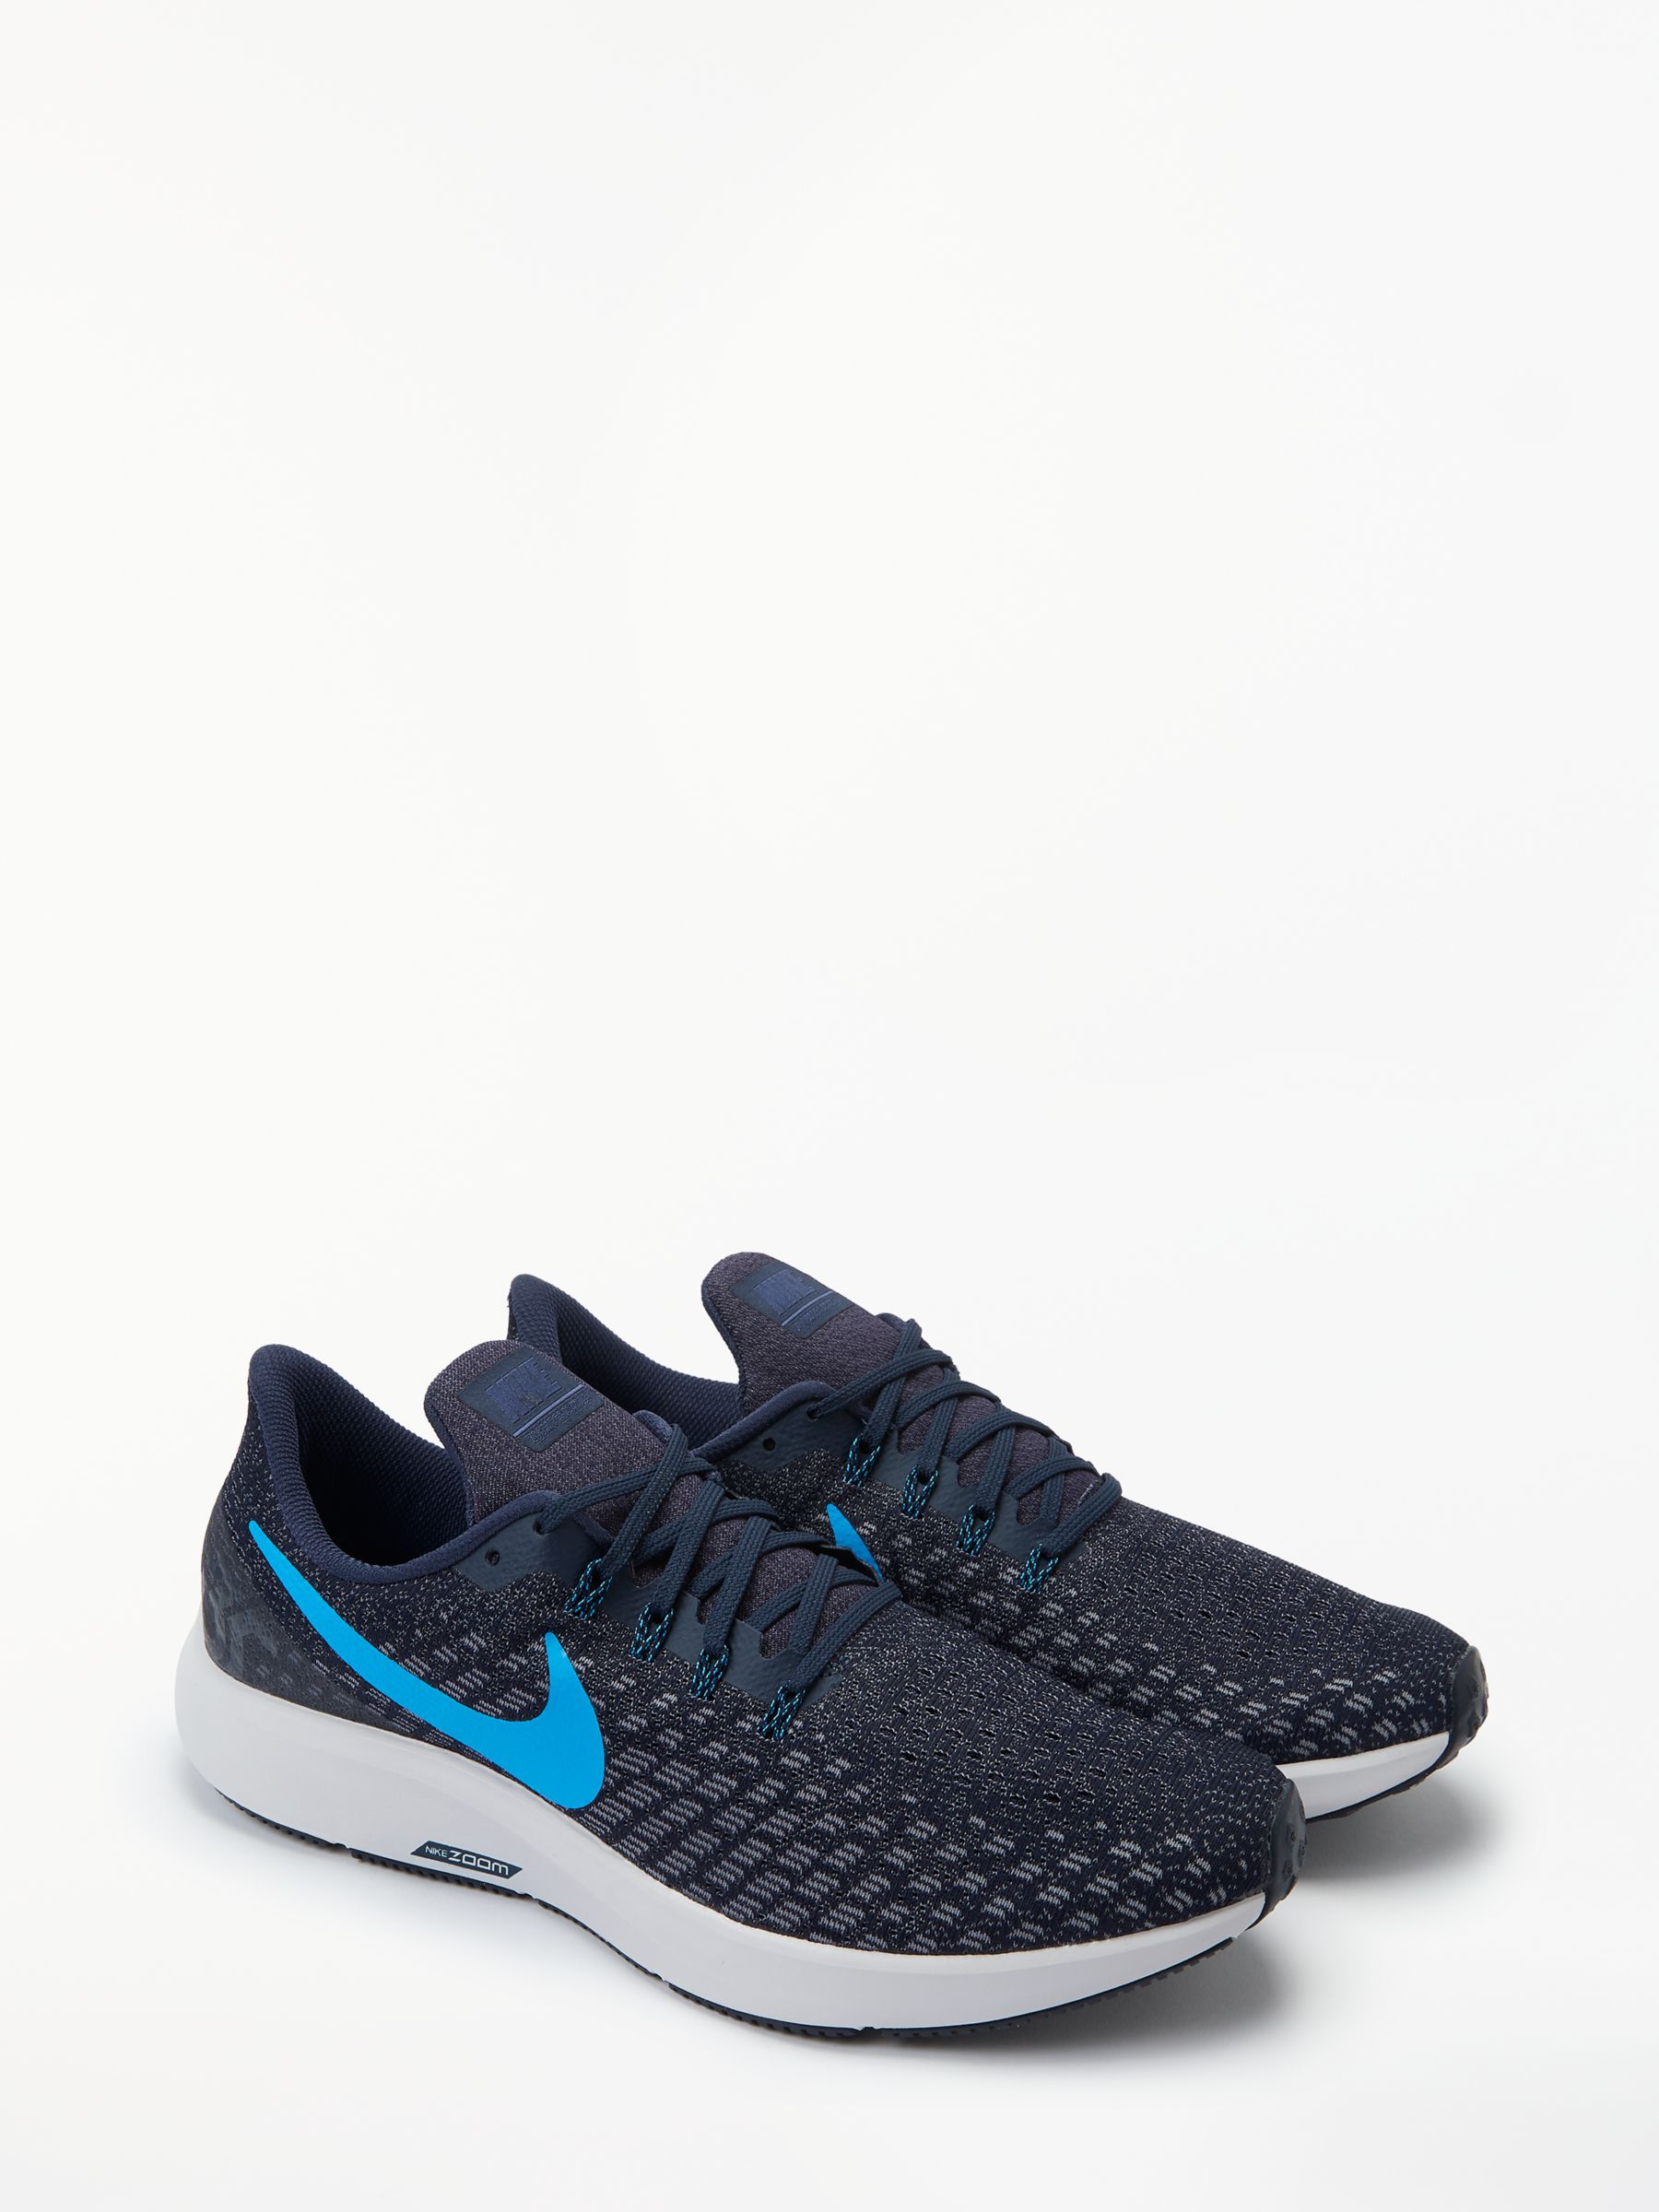 buik niettemin abortus Nike Air Zoom Pegasus 35 Men's Running Shoes, Obsidian Blue/Grey, 11